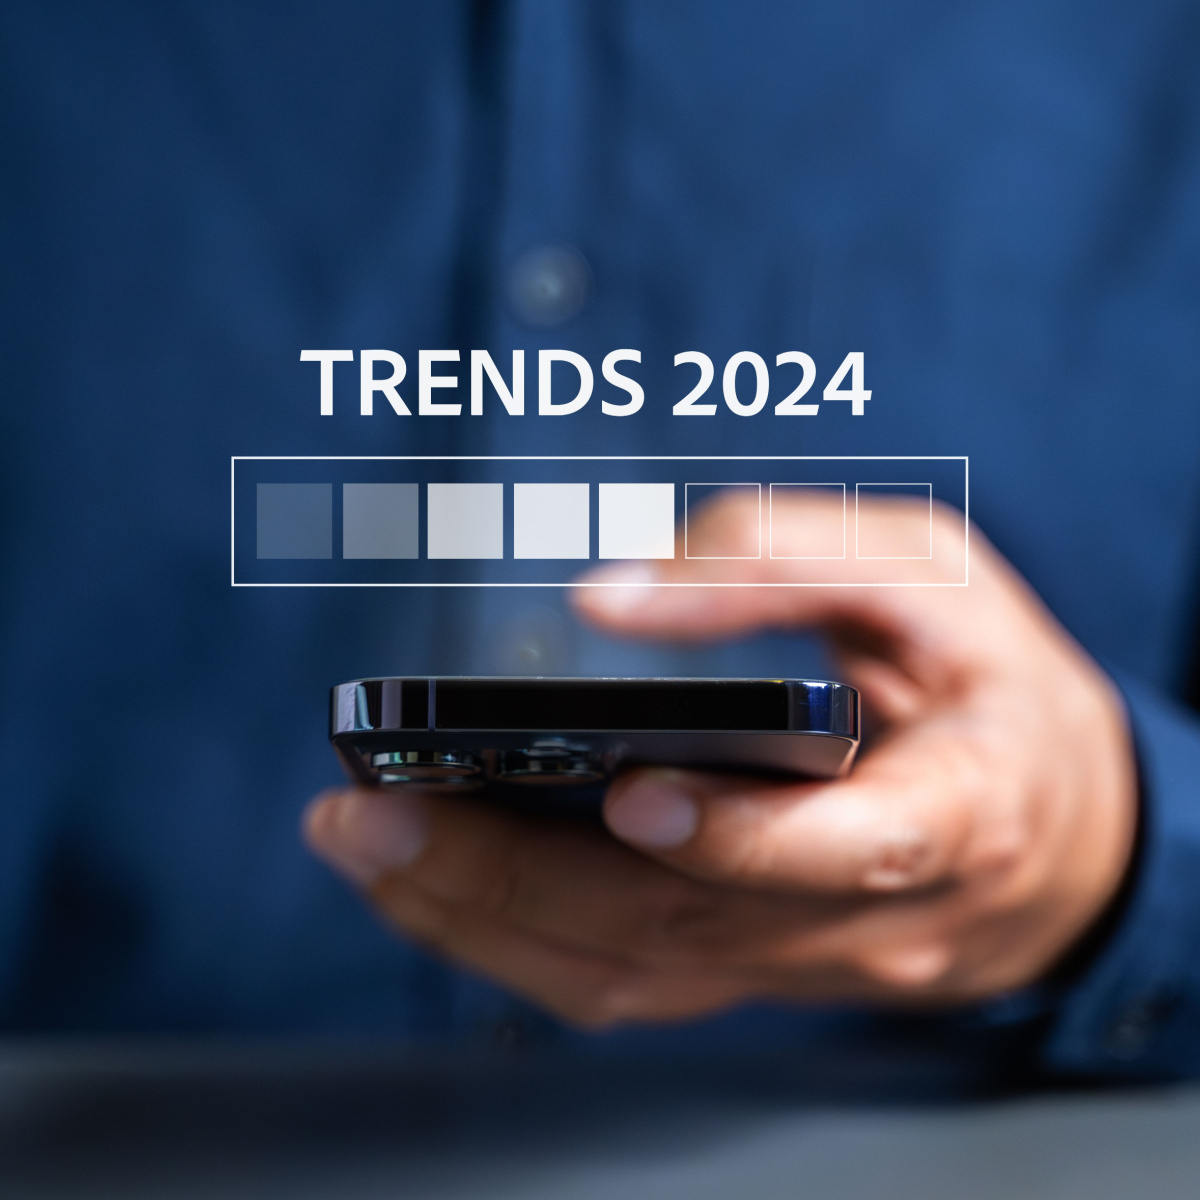 Let these trends inform your Houston digital marketing efforts.